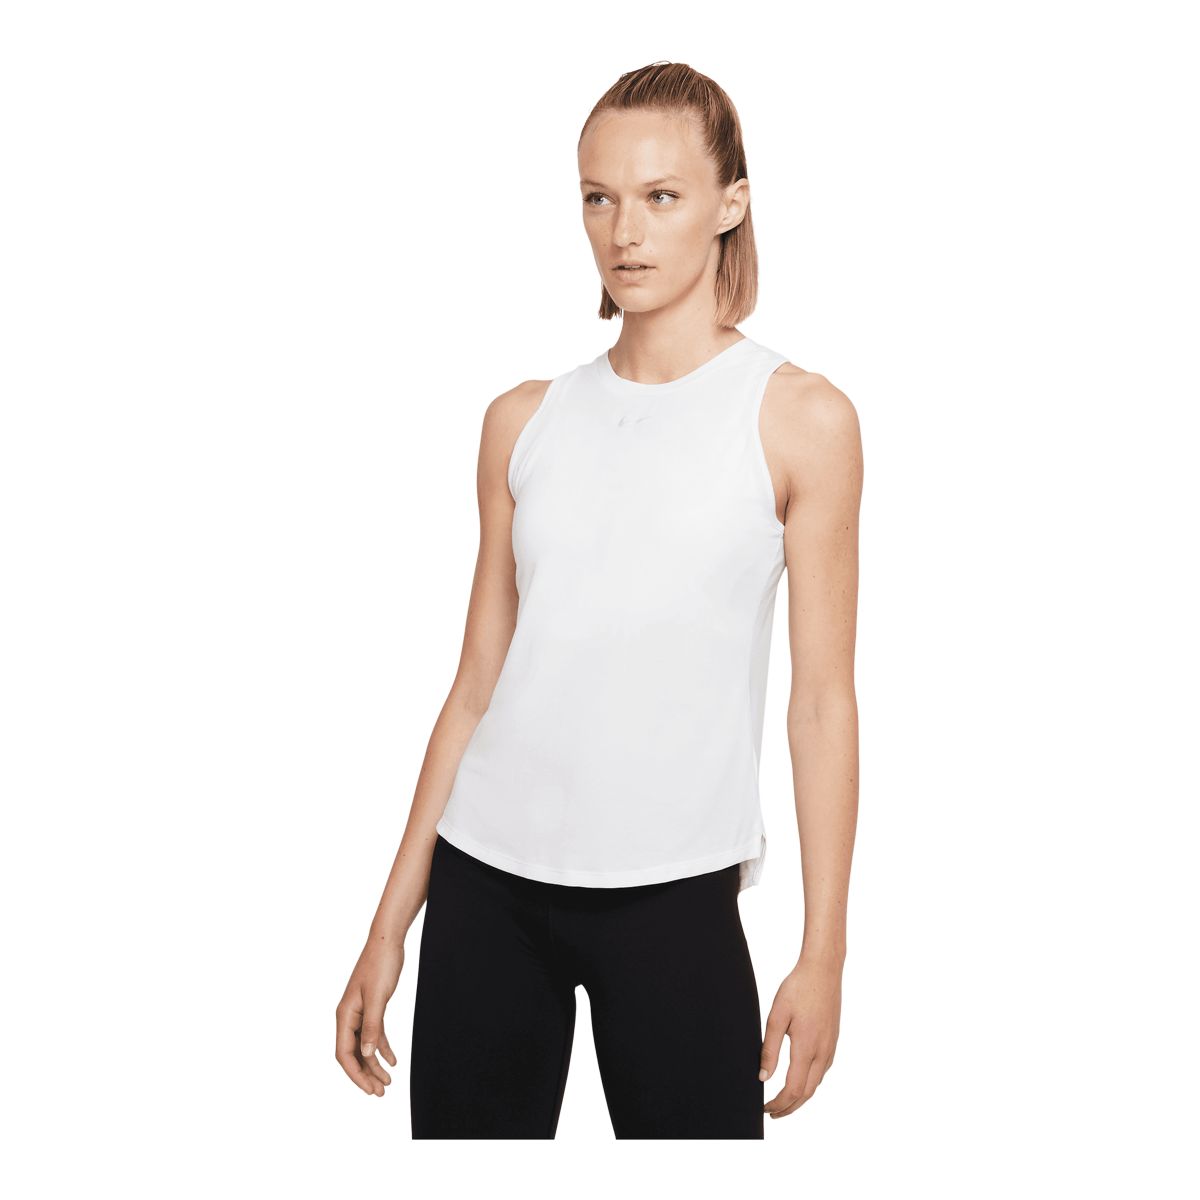 Nike Women's One Luxe Twist Workout Crop T Shirt, Dri-FIT